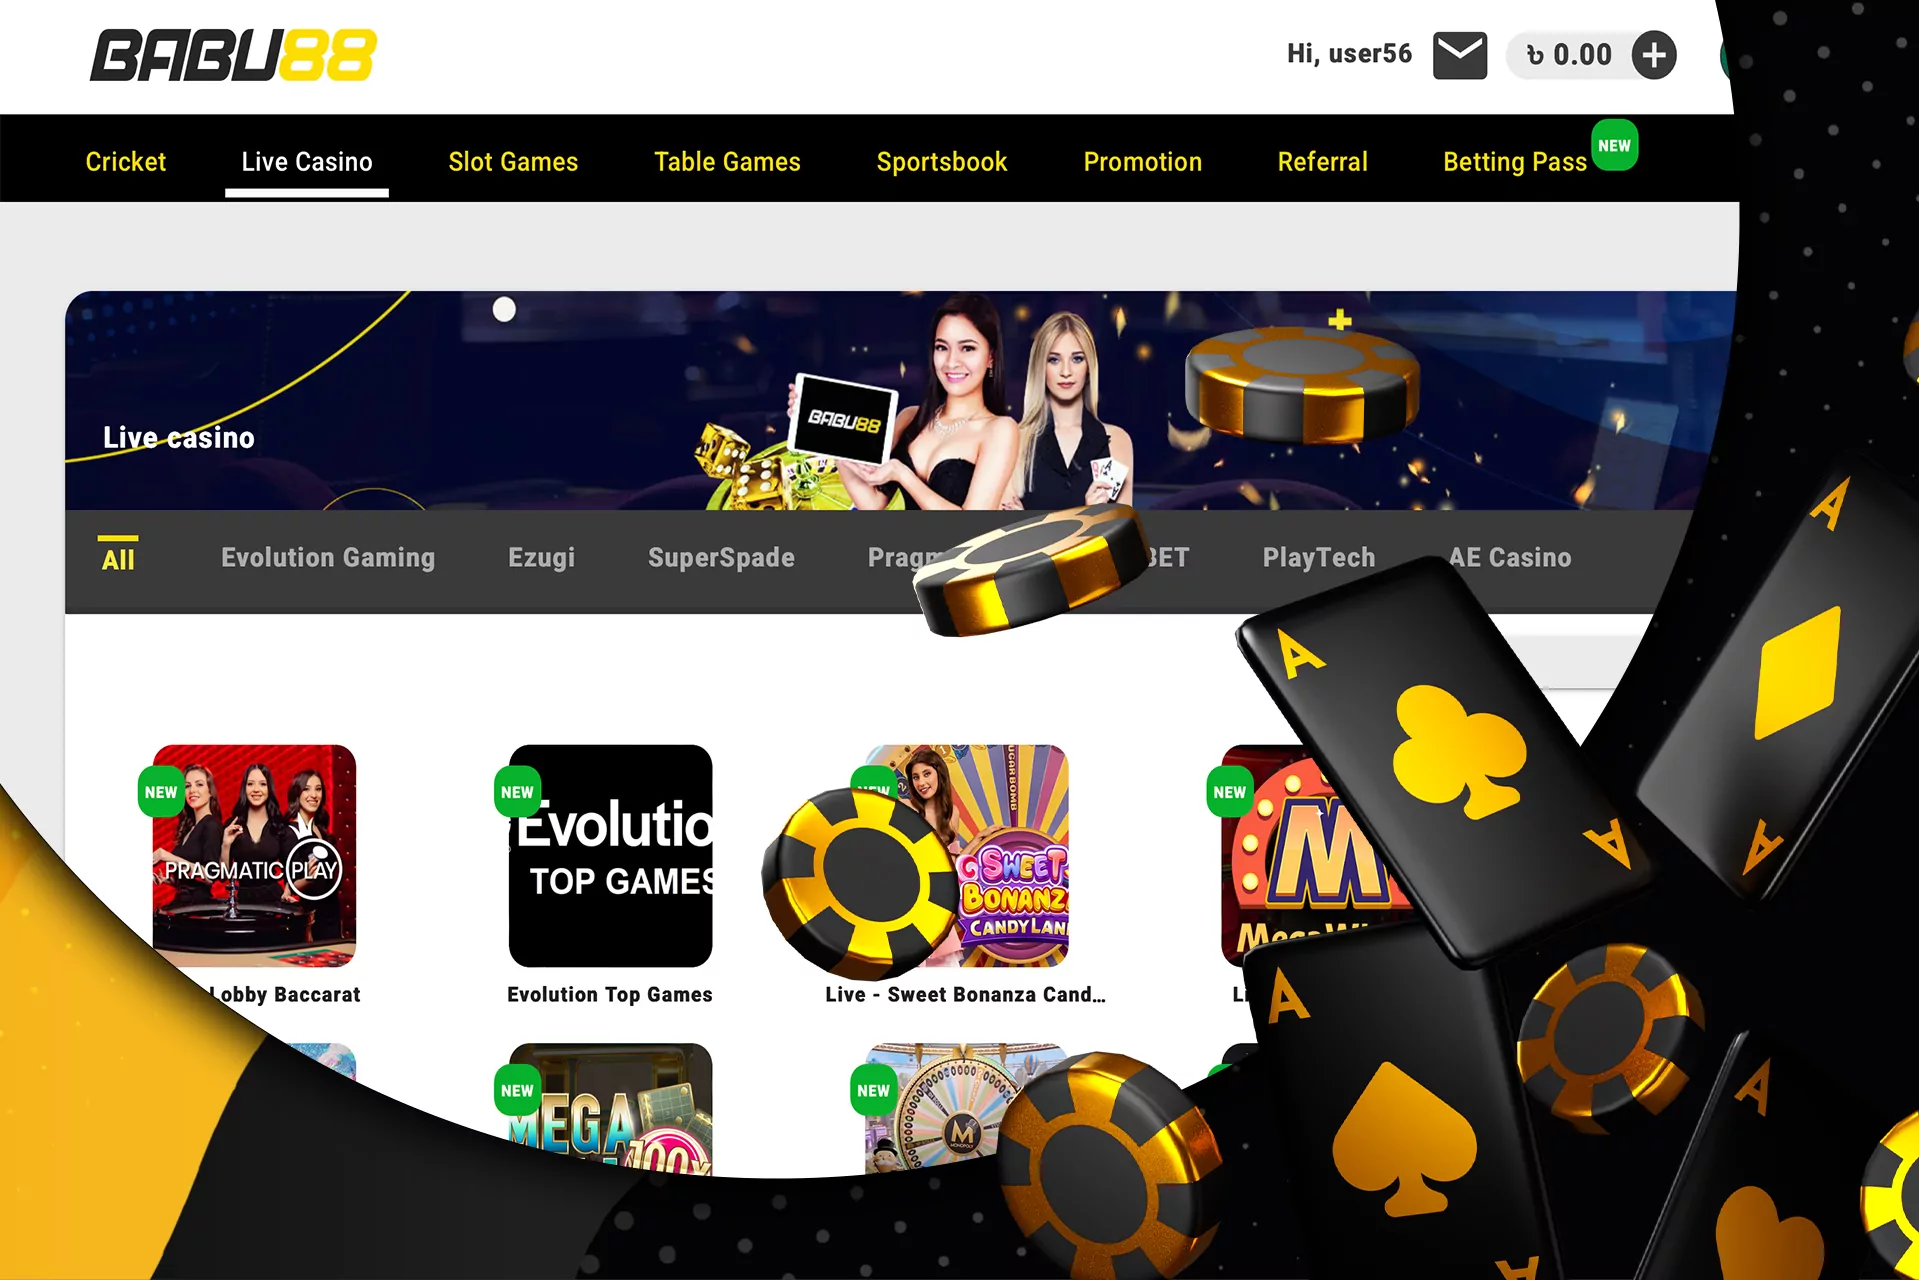 Babu88 also offers online casino games.